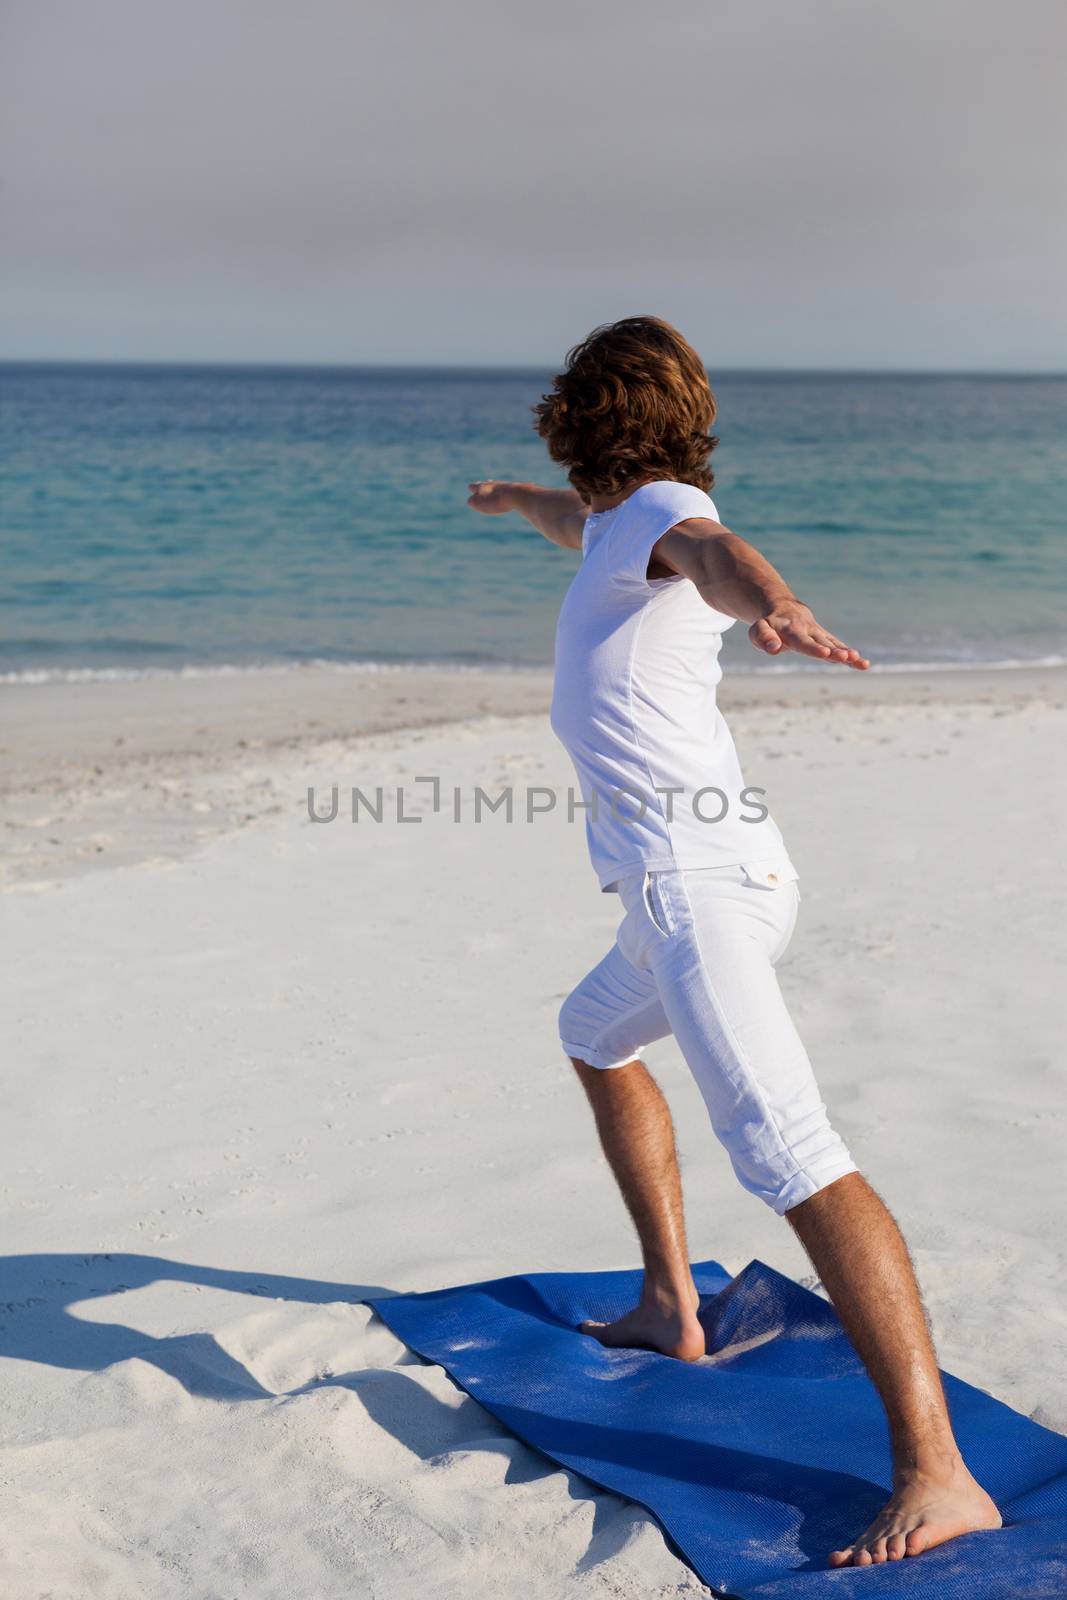 Man performing yoga at beach by Wavebreakmedia